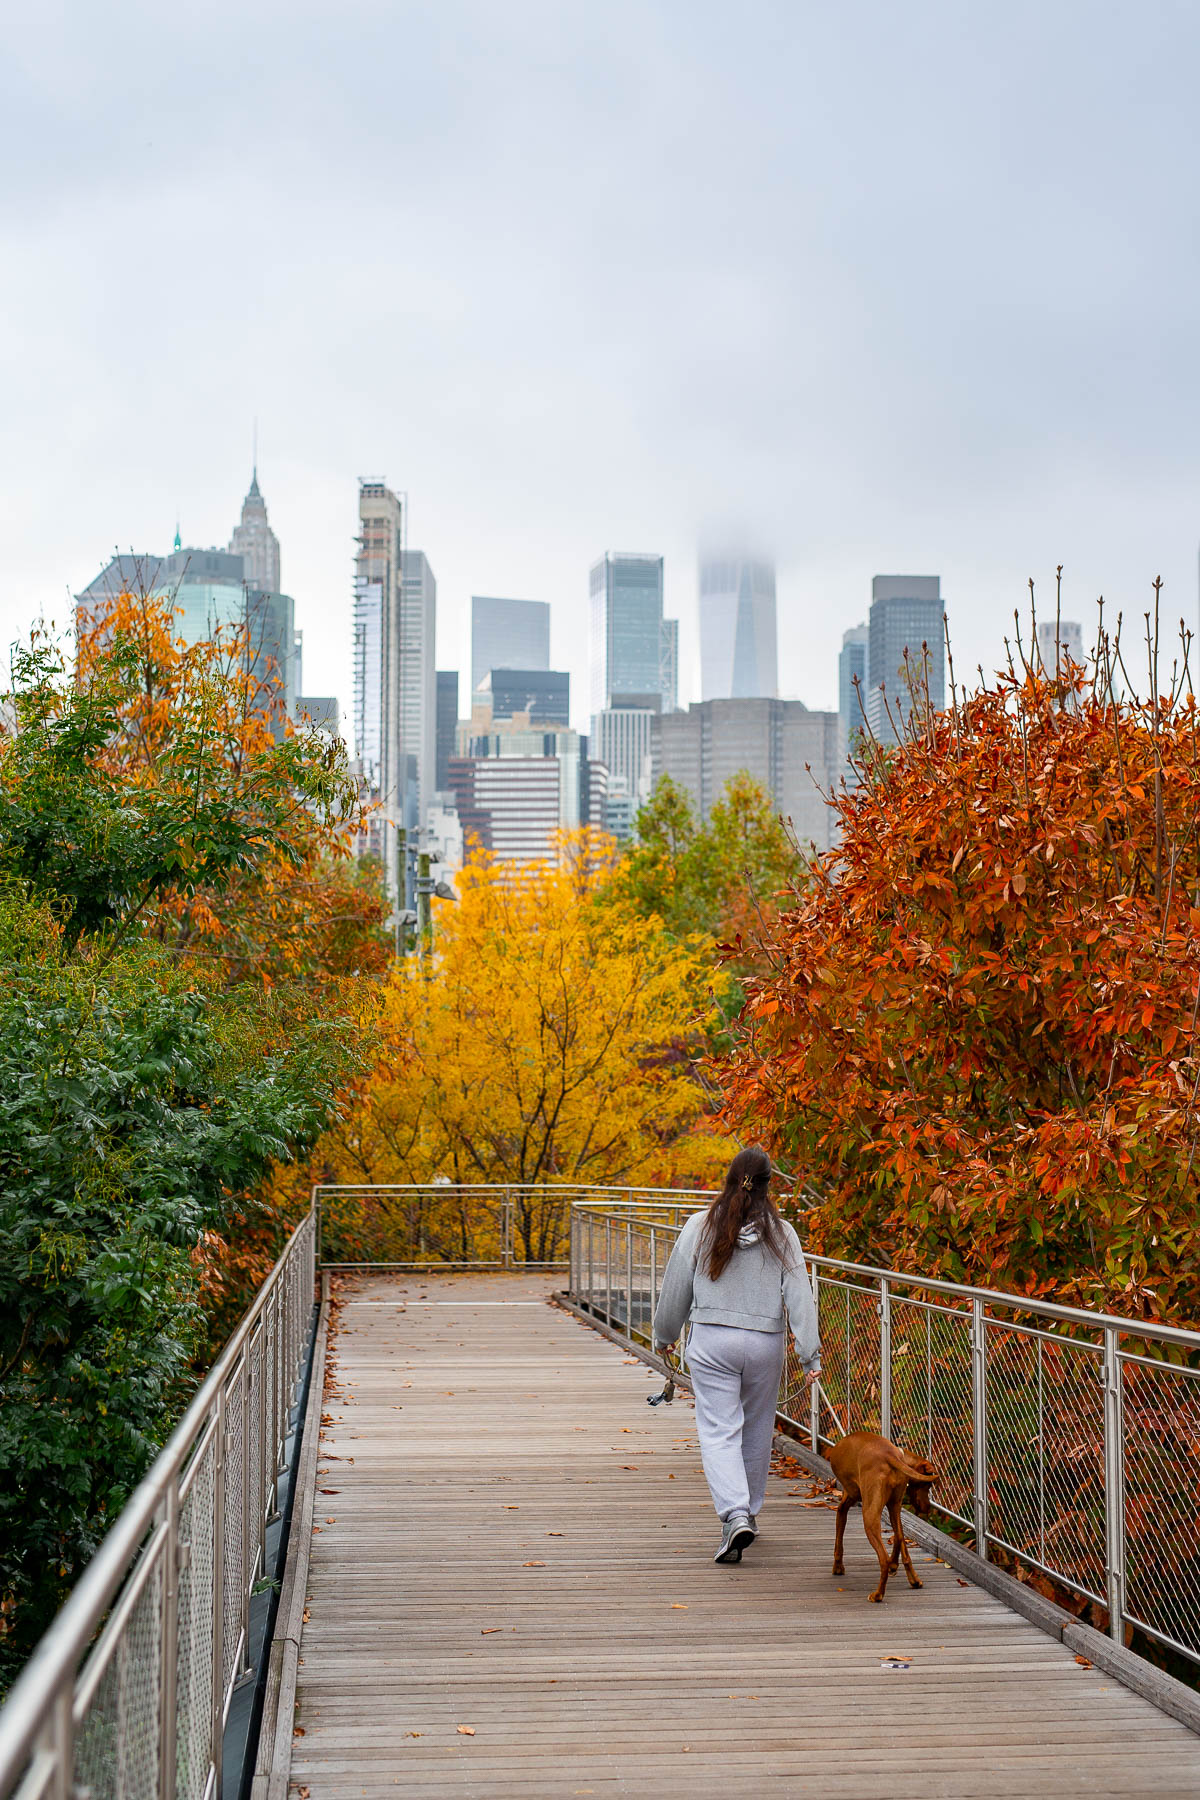 Brooklyn Bridge Park Fall Foliage in NYC NYC in fall